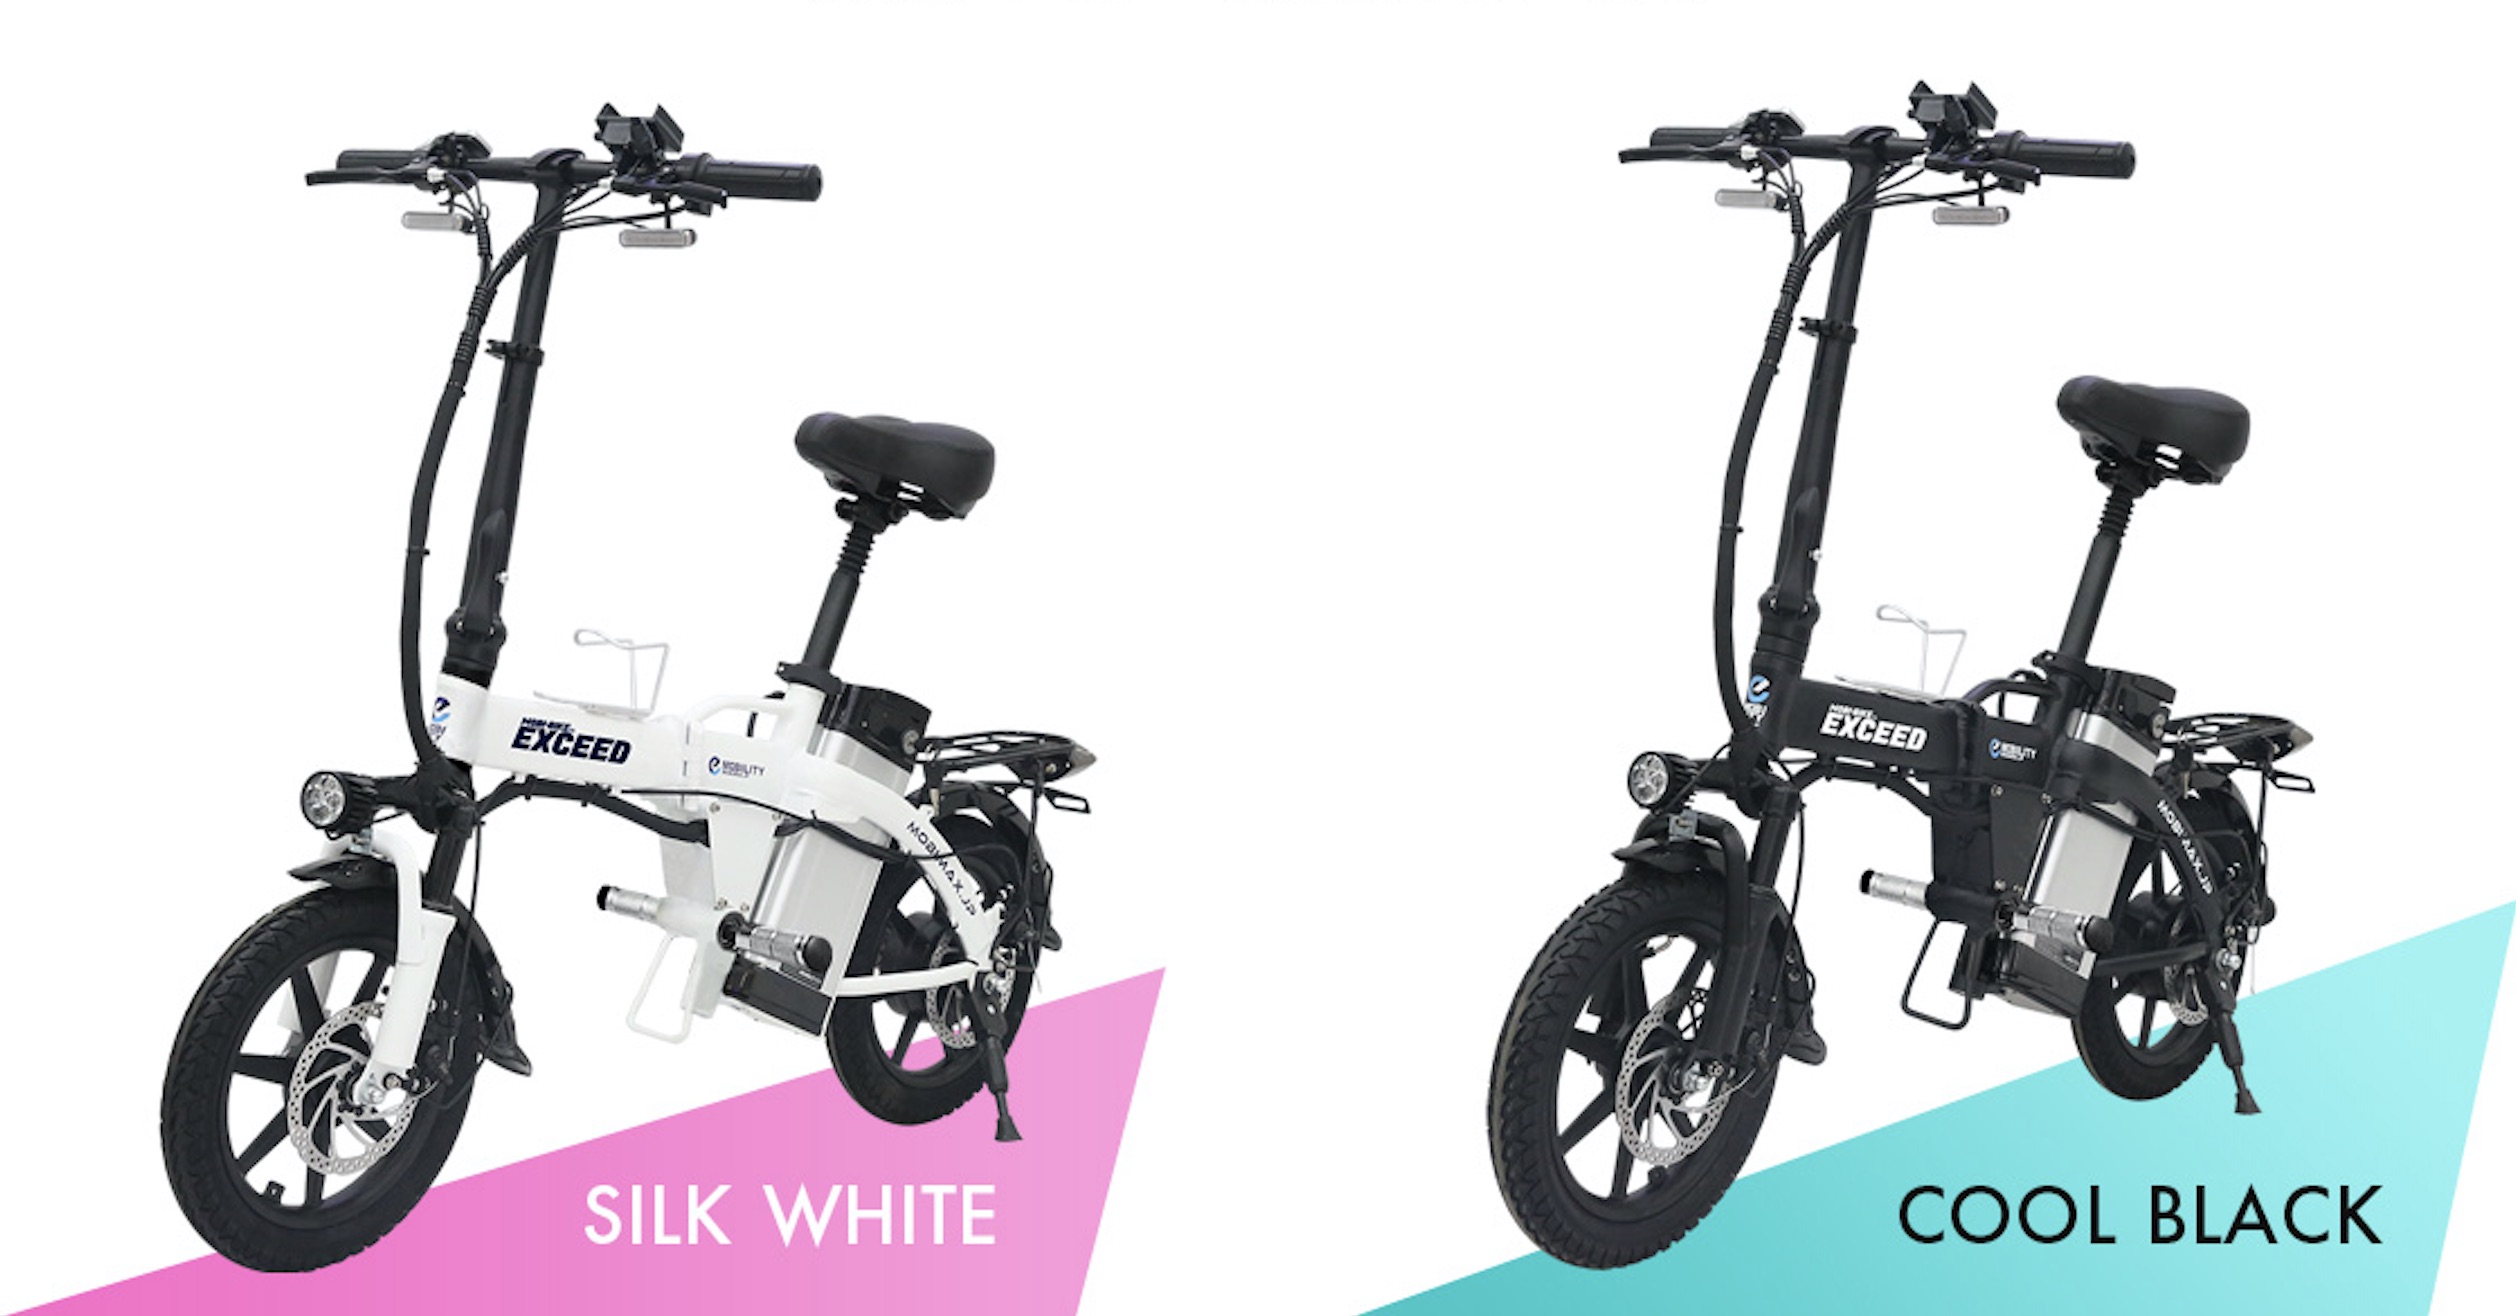 ペダルレスフル電動自転車「MOBI-BIKE EXCEED TKG Ver」予約開始、特定小型原付─初回限定50台9万9880円